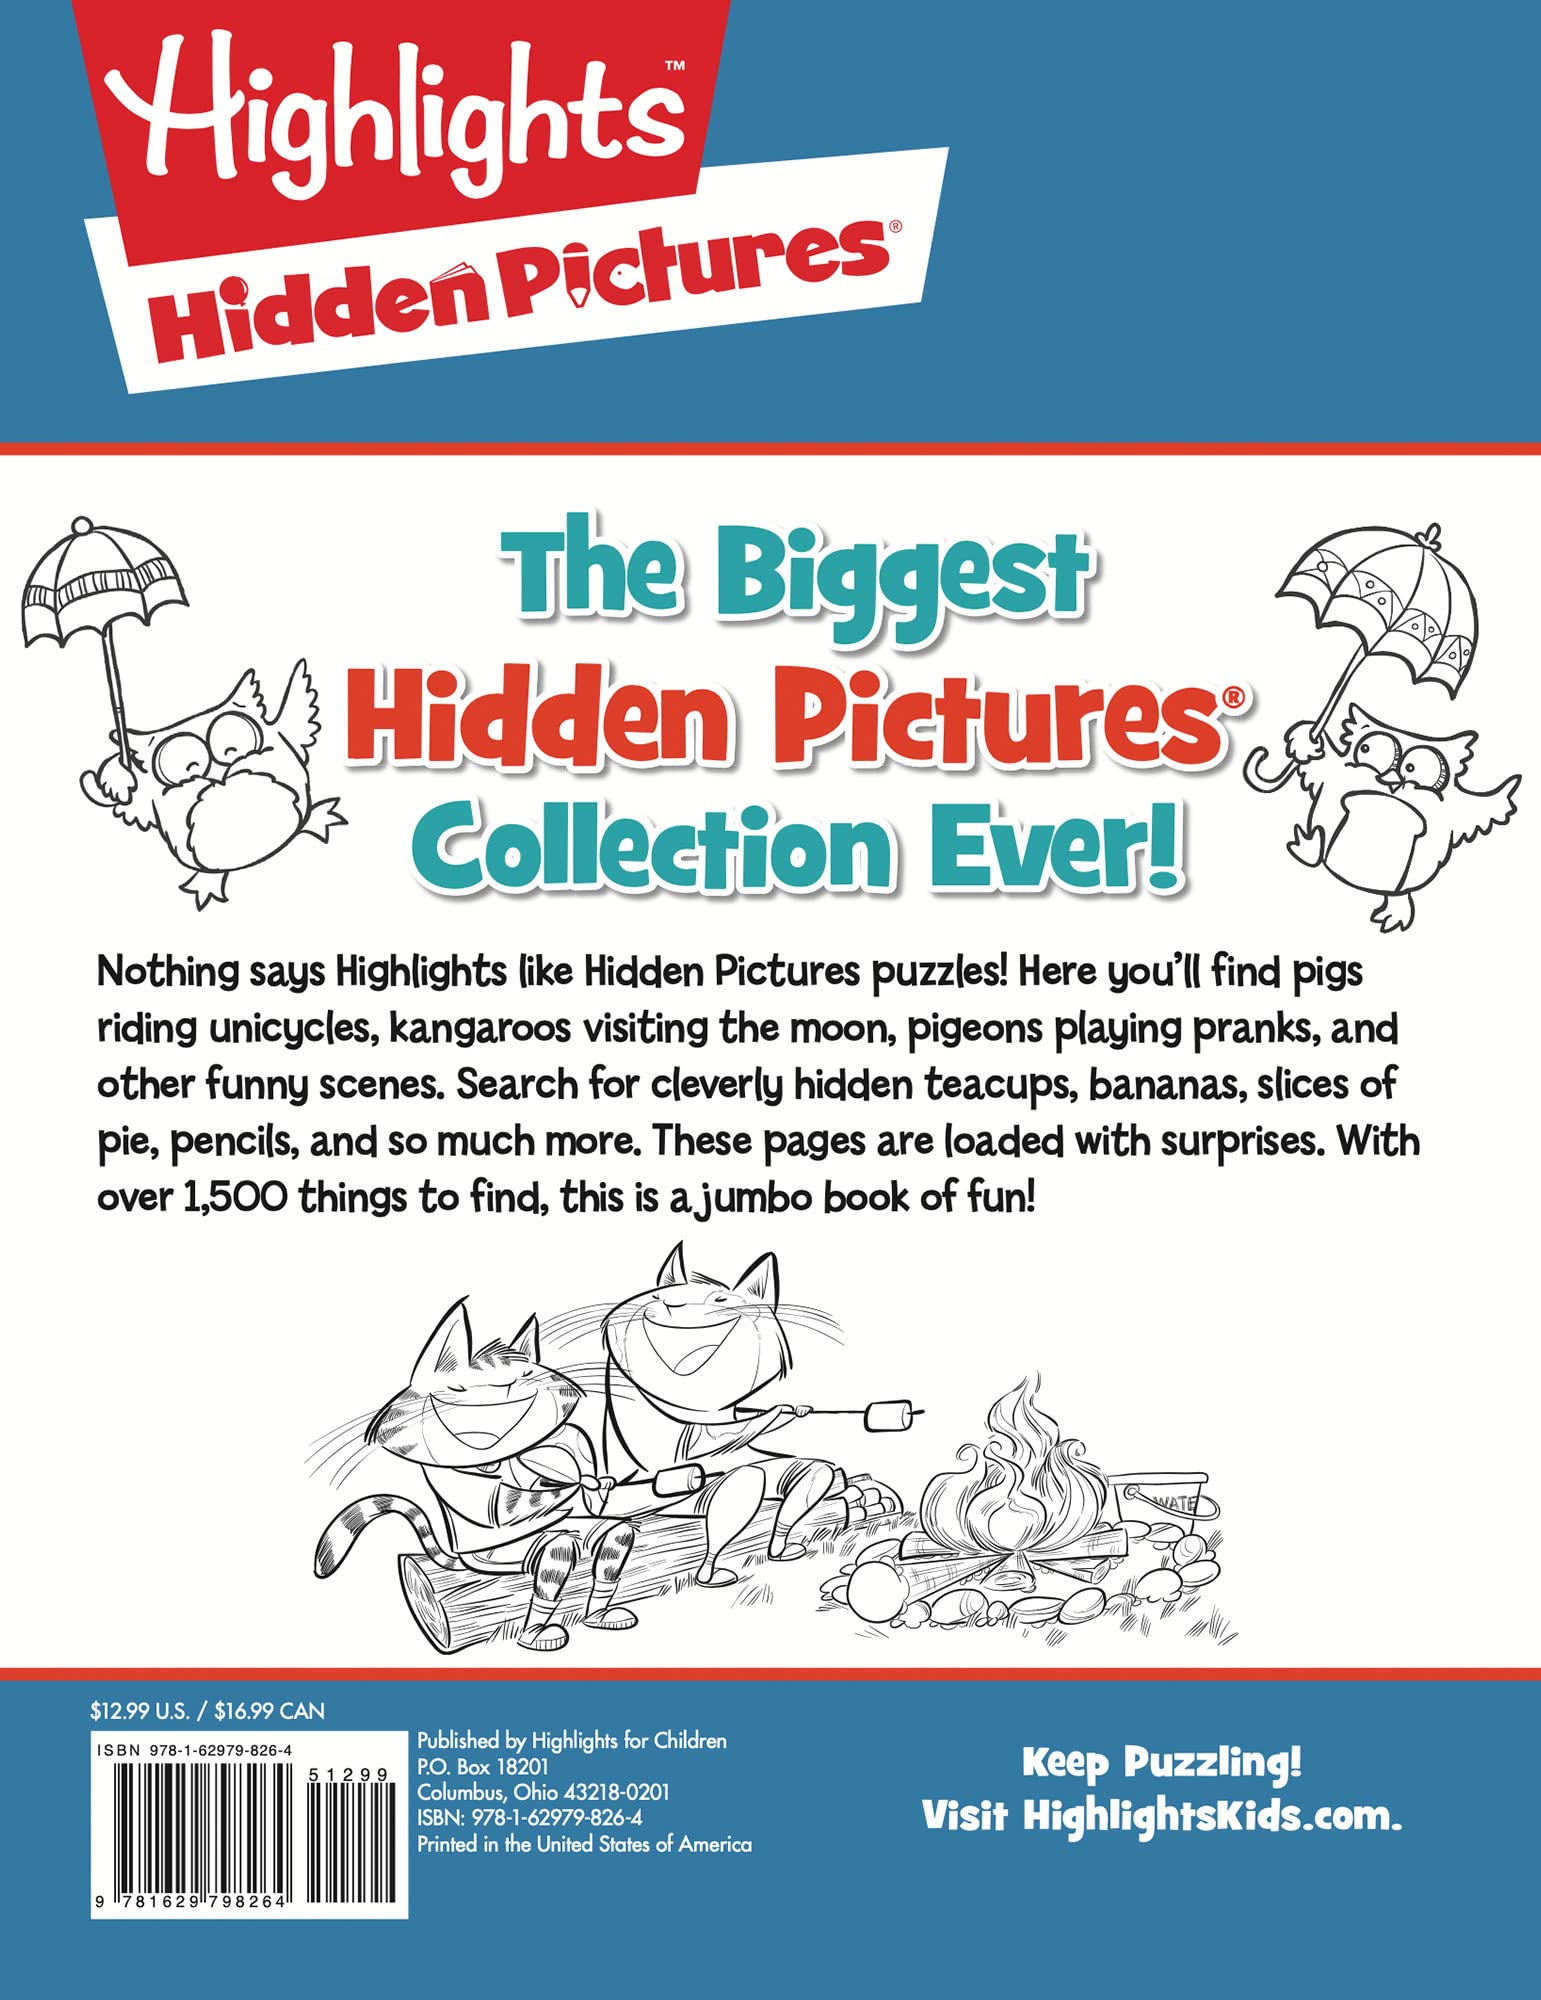 Jumbo Book of Hidden Pictures (Highlights Jumbo Books & Pads)